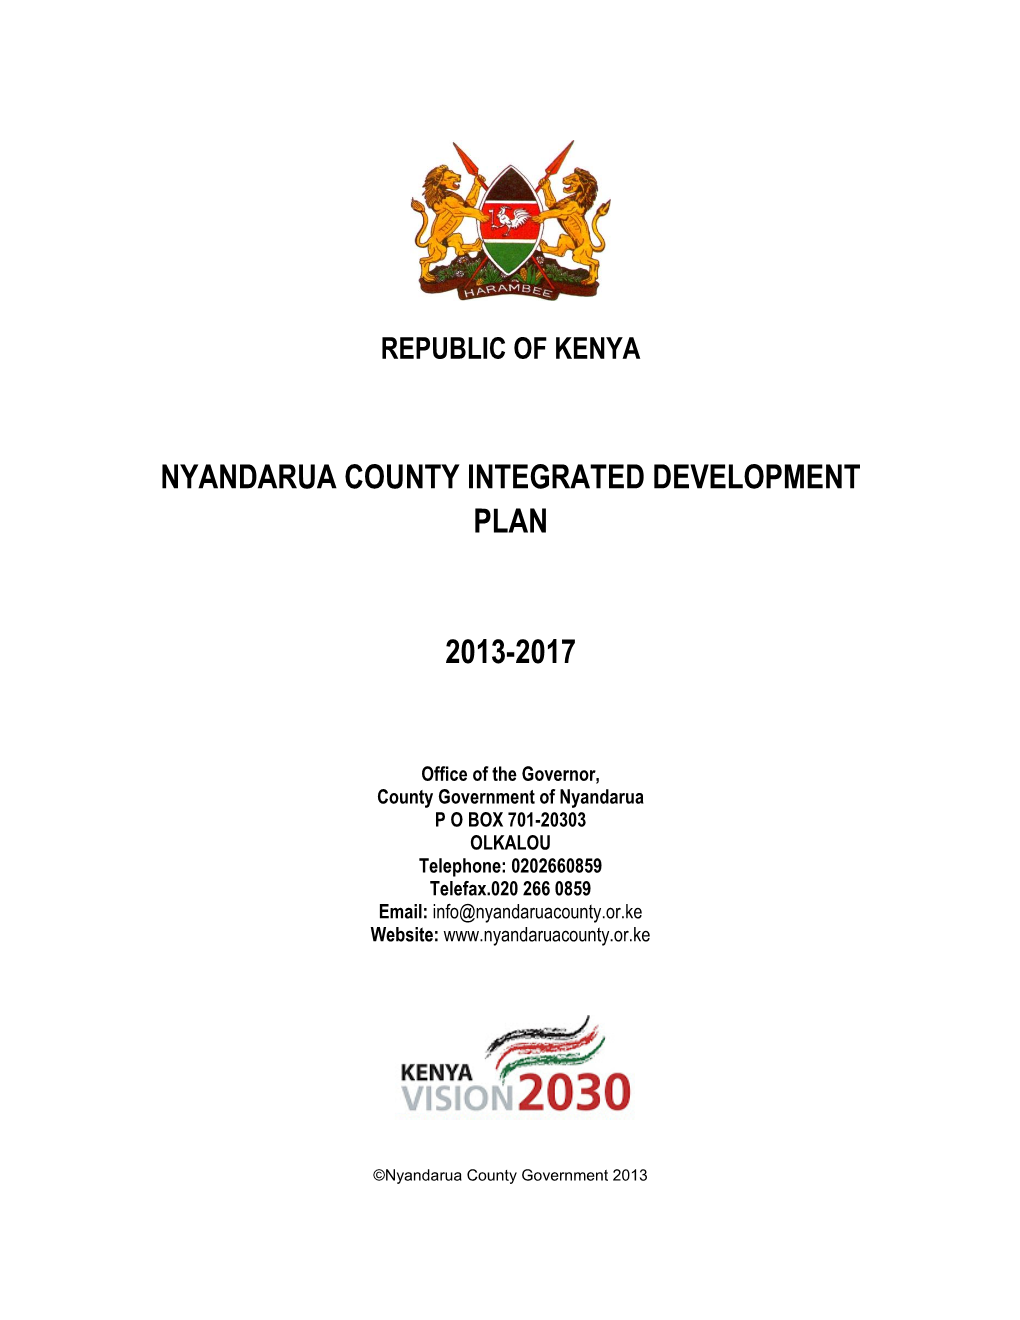 Nyandarua County Integrated Development Plan